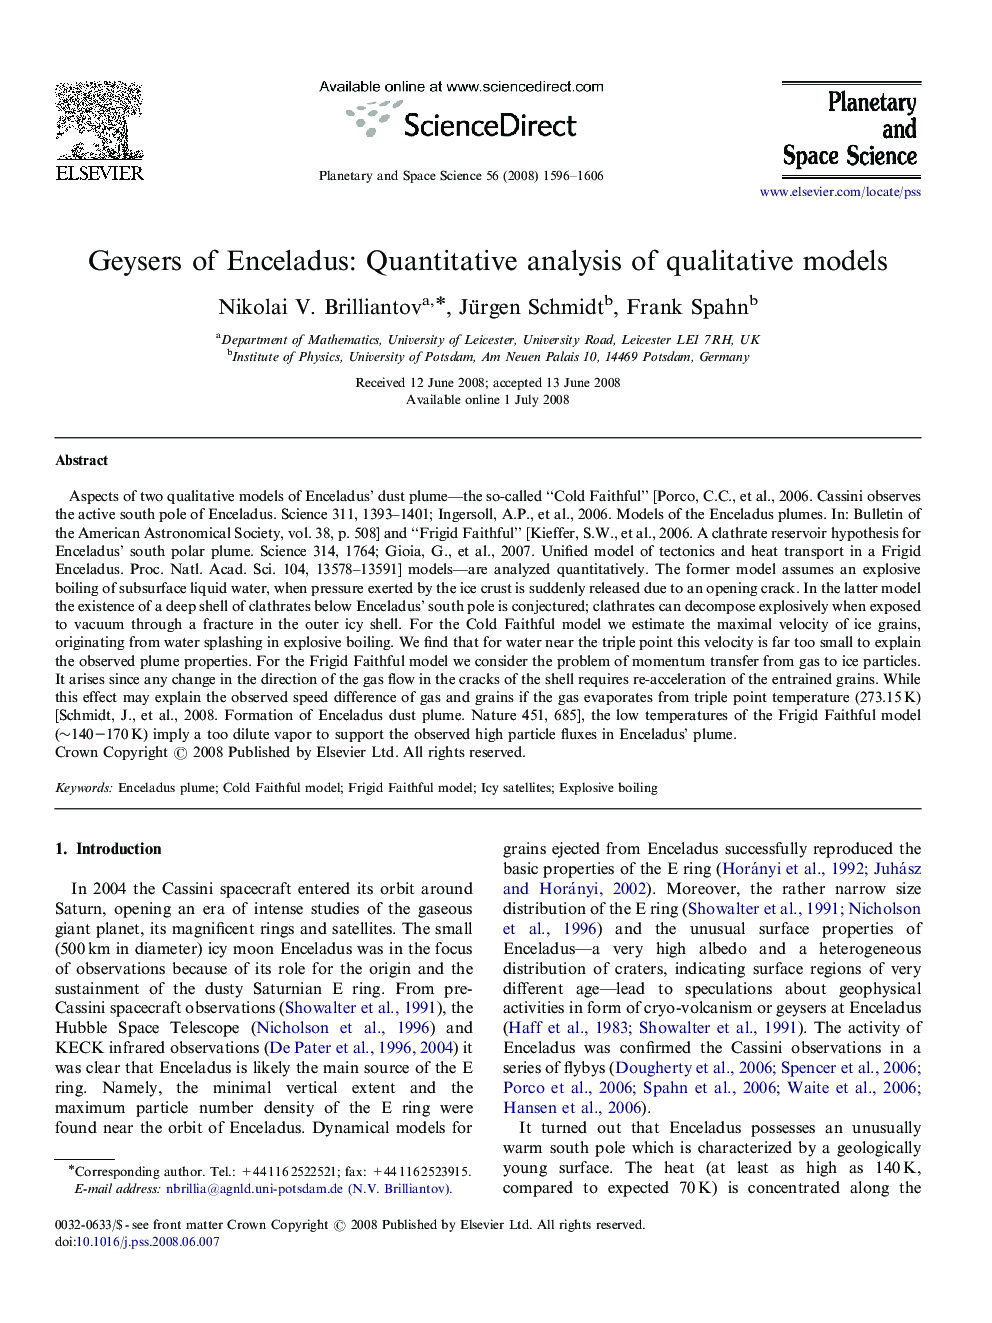 Geysers of Enceladus: Quantitative analysis of qualitative models